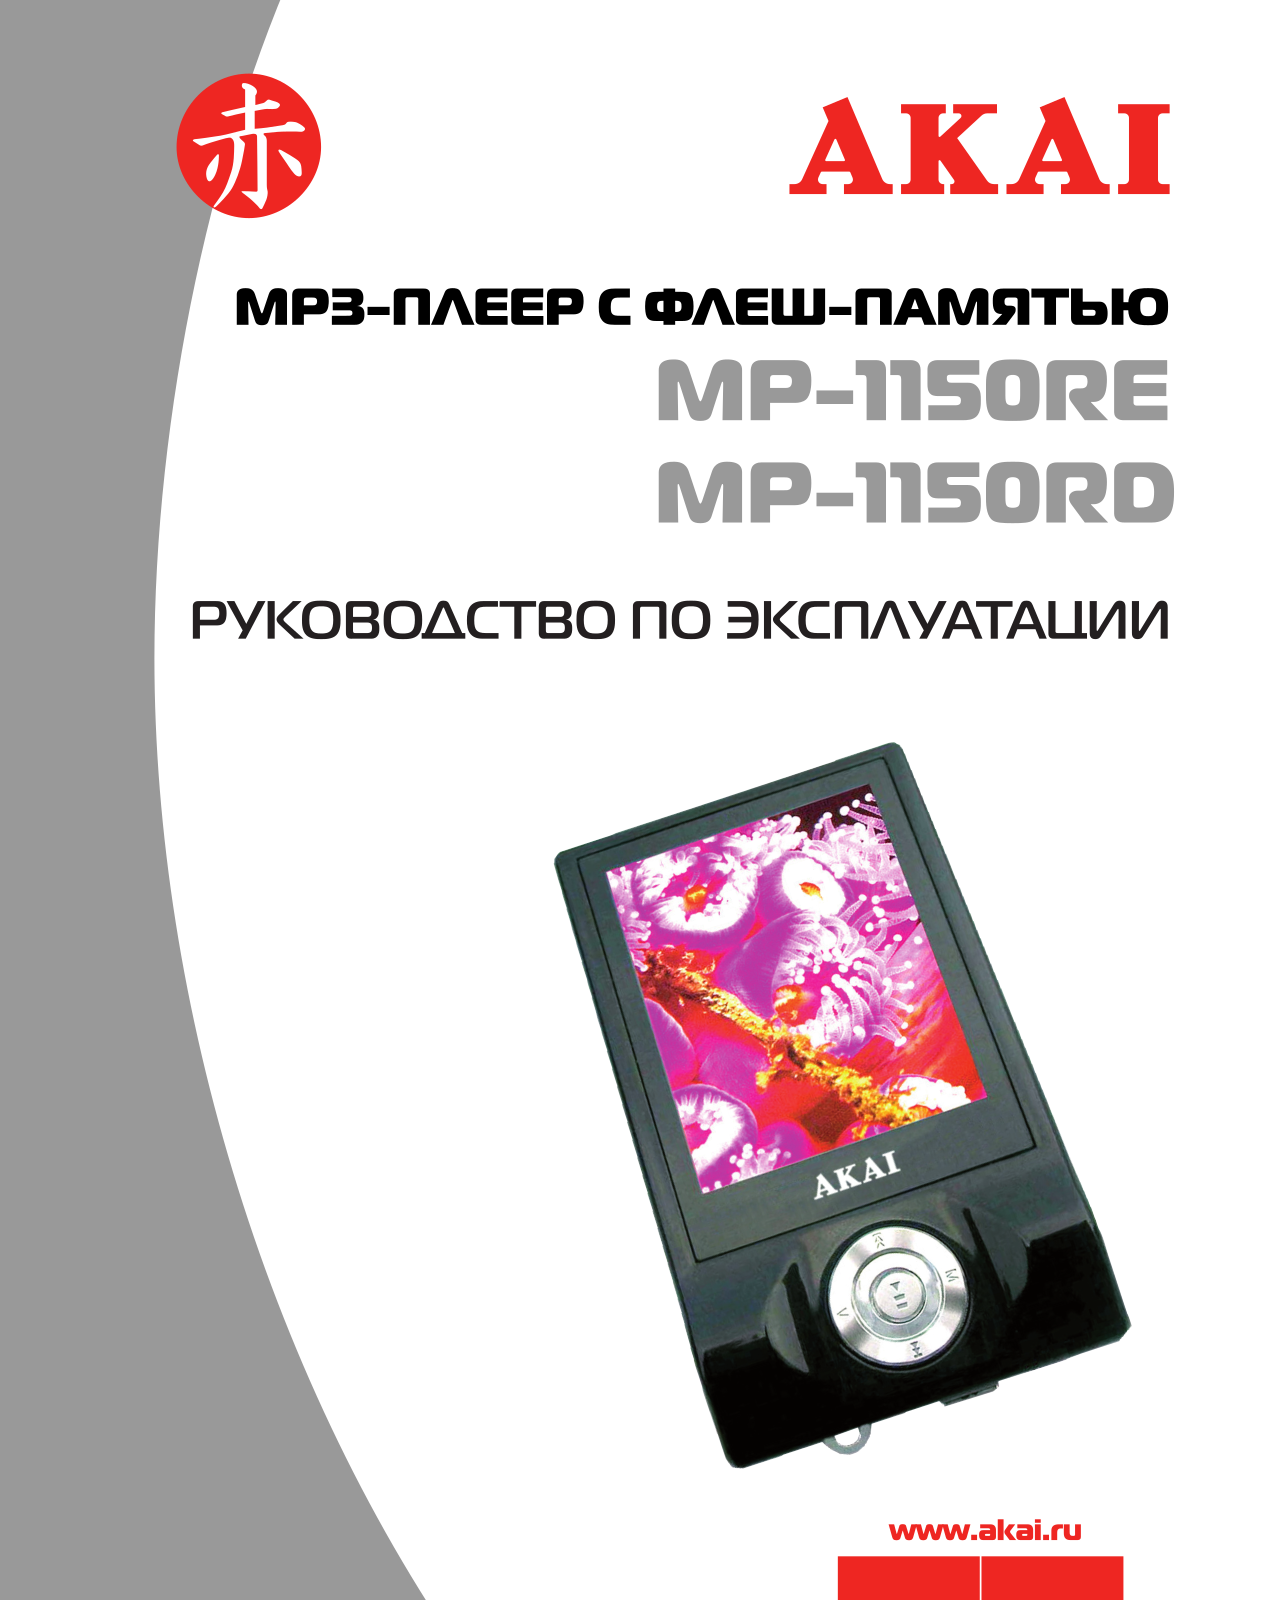 Akai MP-1150RD, MP-1150RE User Manual